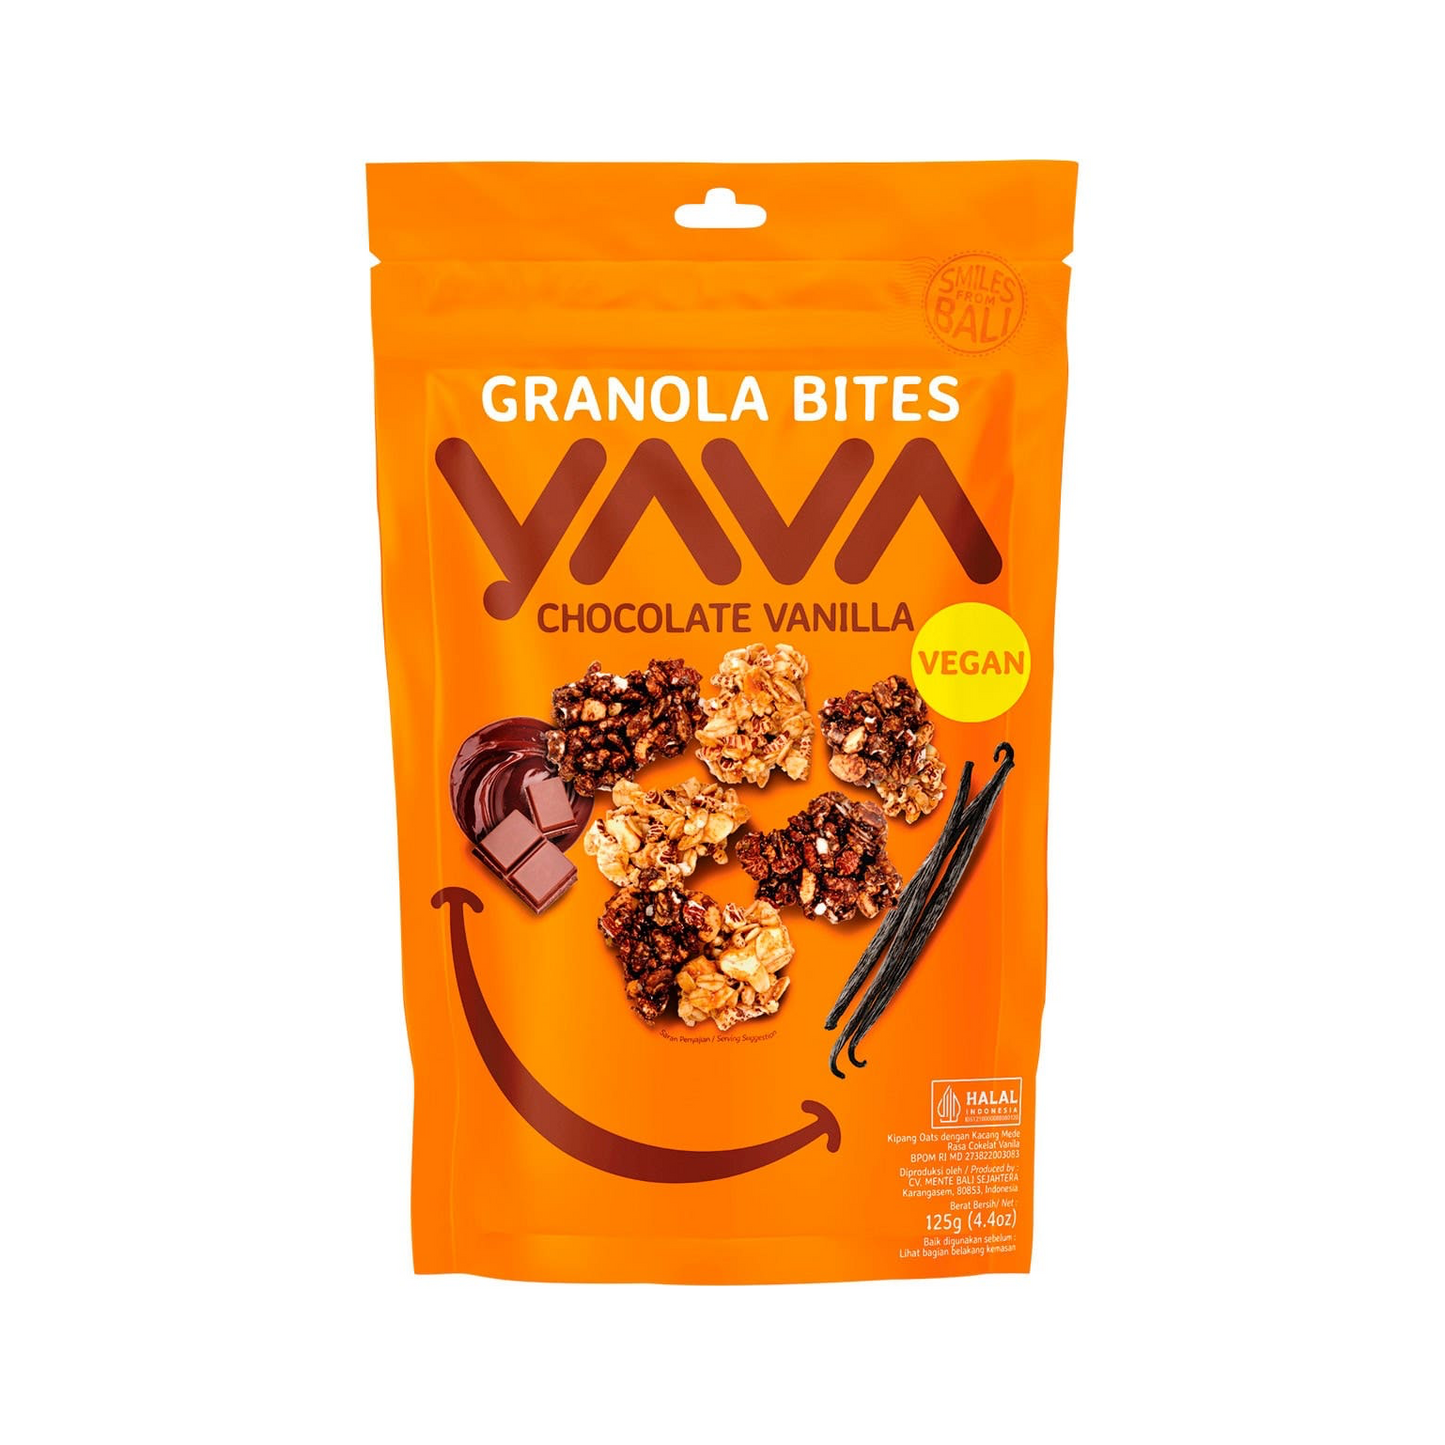 Yava Granola Bites 125g Or 400g, Chocolate Vanilla Flavour